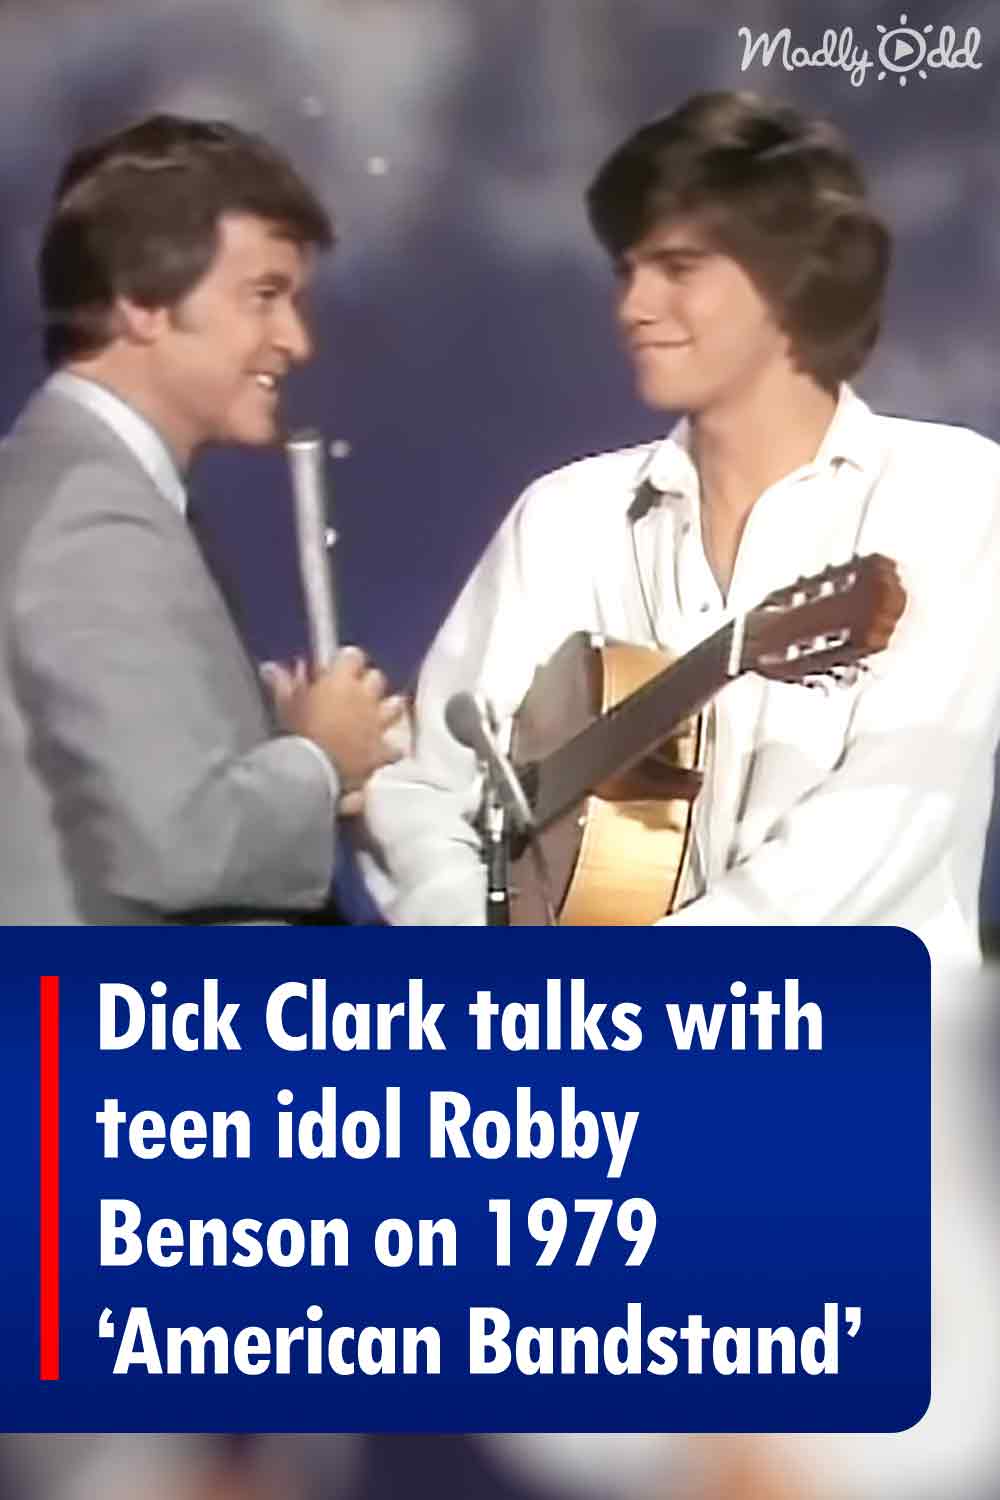 Dick Clark talks with teen idol Robby Benson on 1979 ‘American Bandstand’